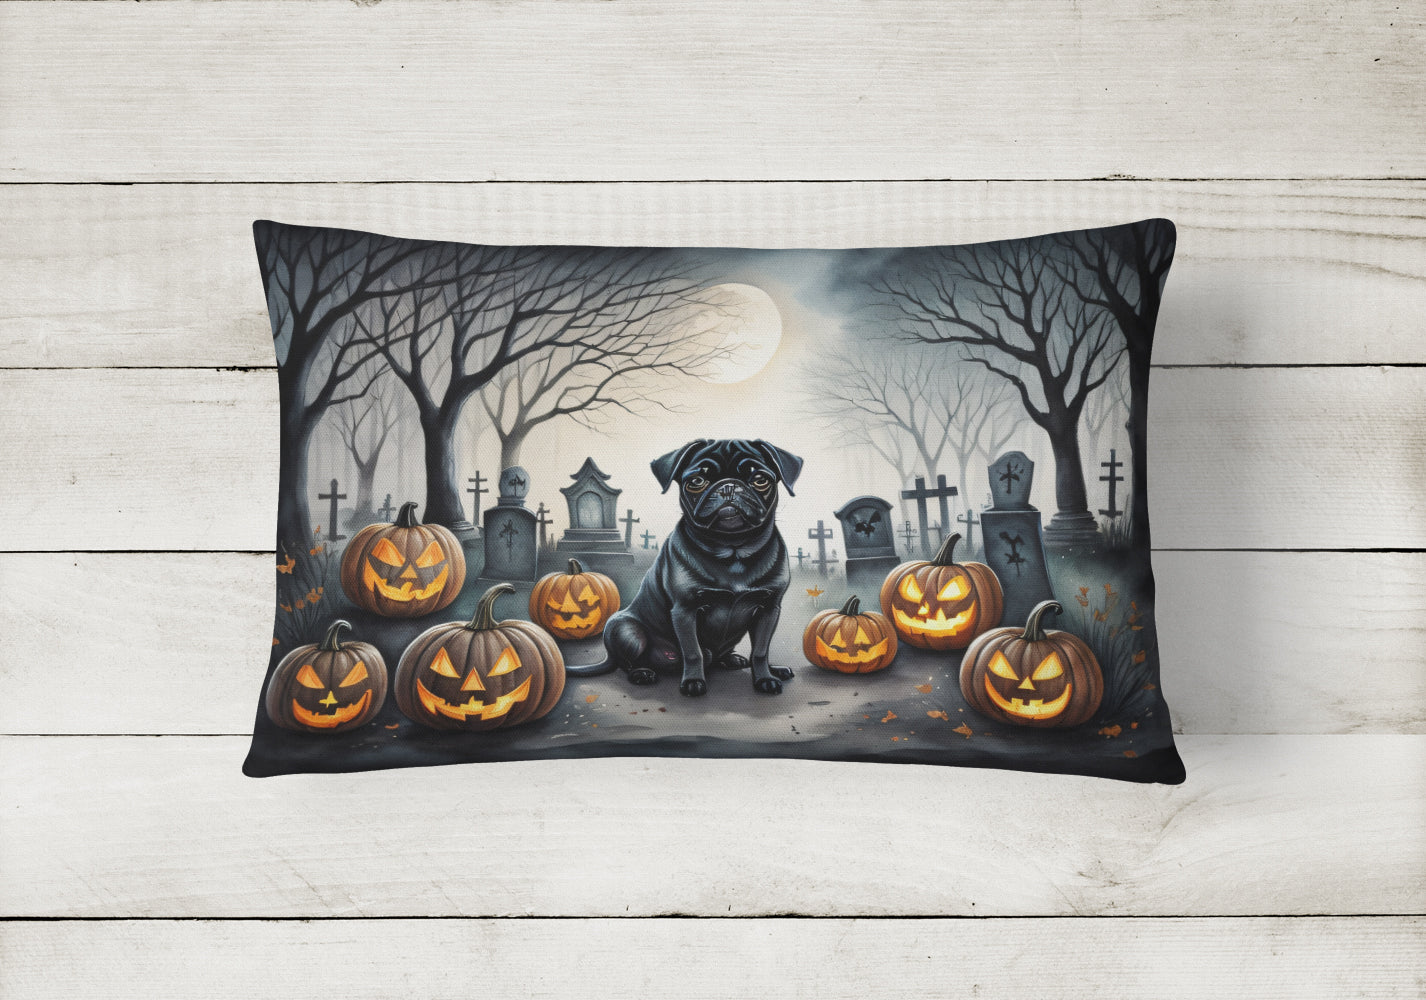 Buy this Black Pug Spooky Halloween Fabric Decorative Pillow